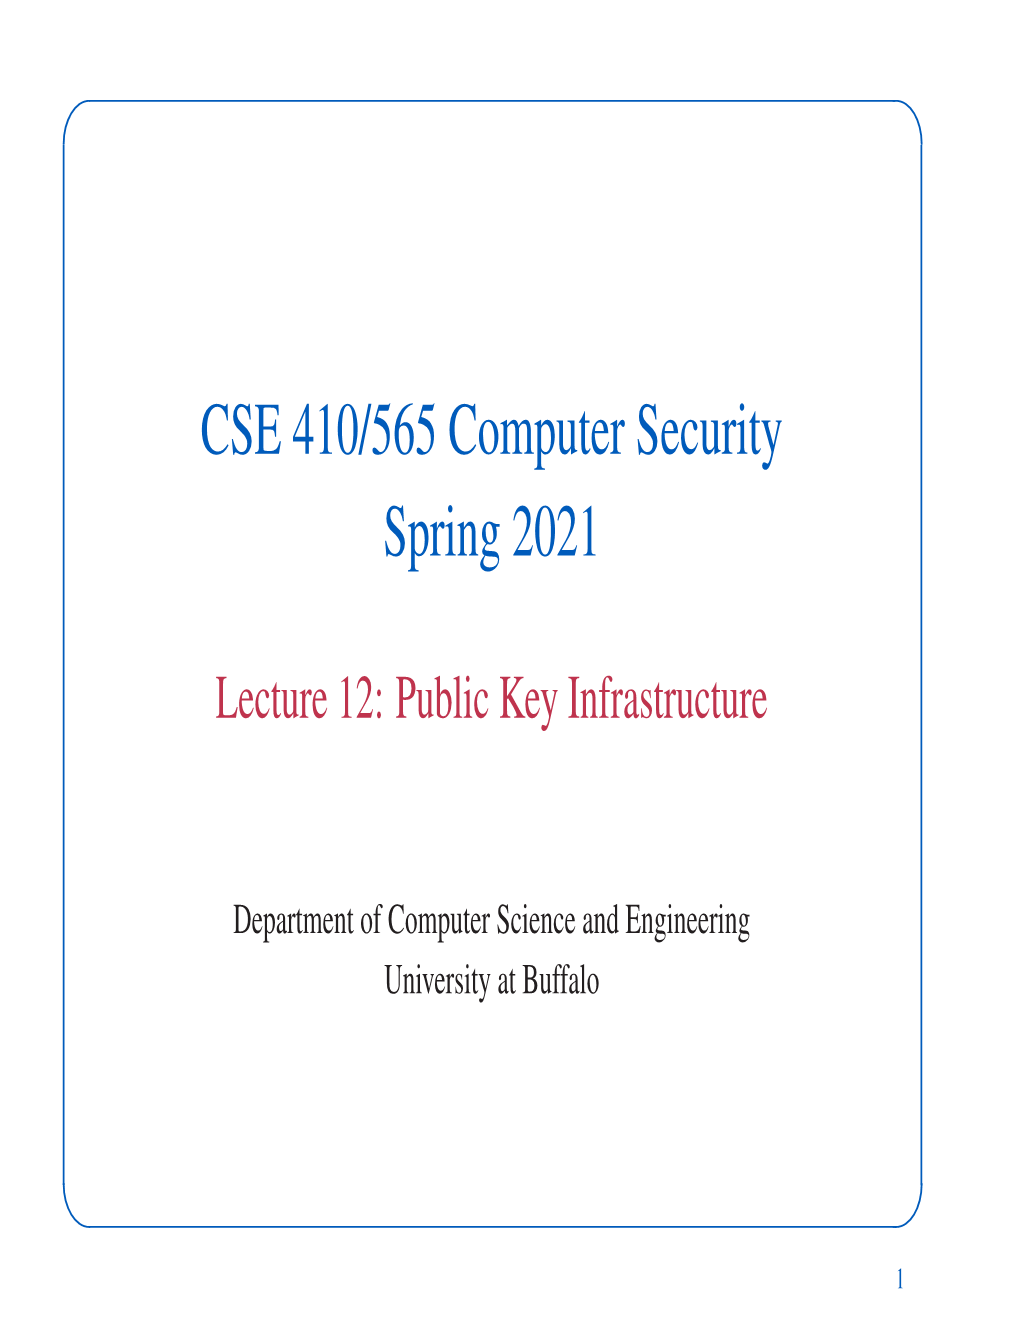 CSE 410/565 Computer Security Spring 2021